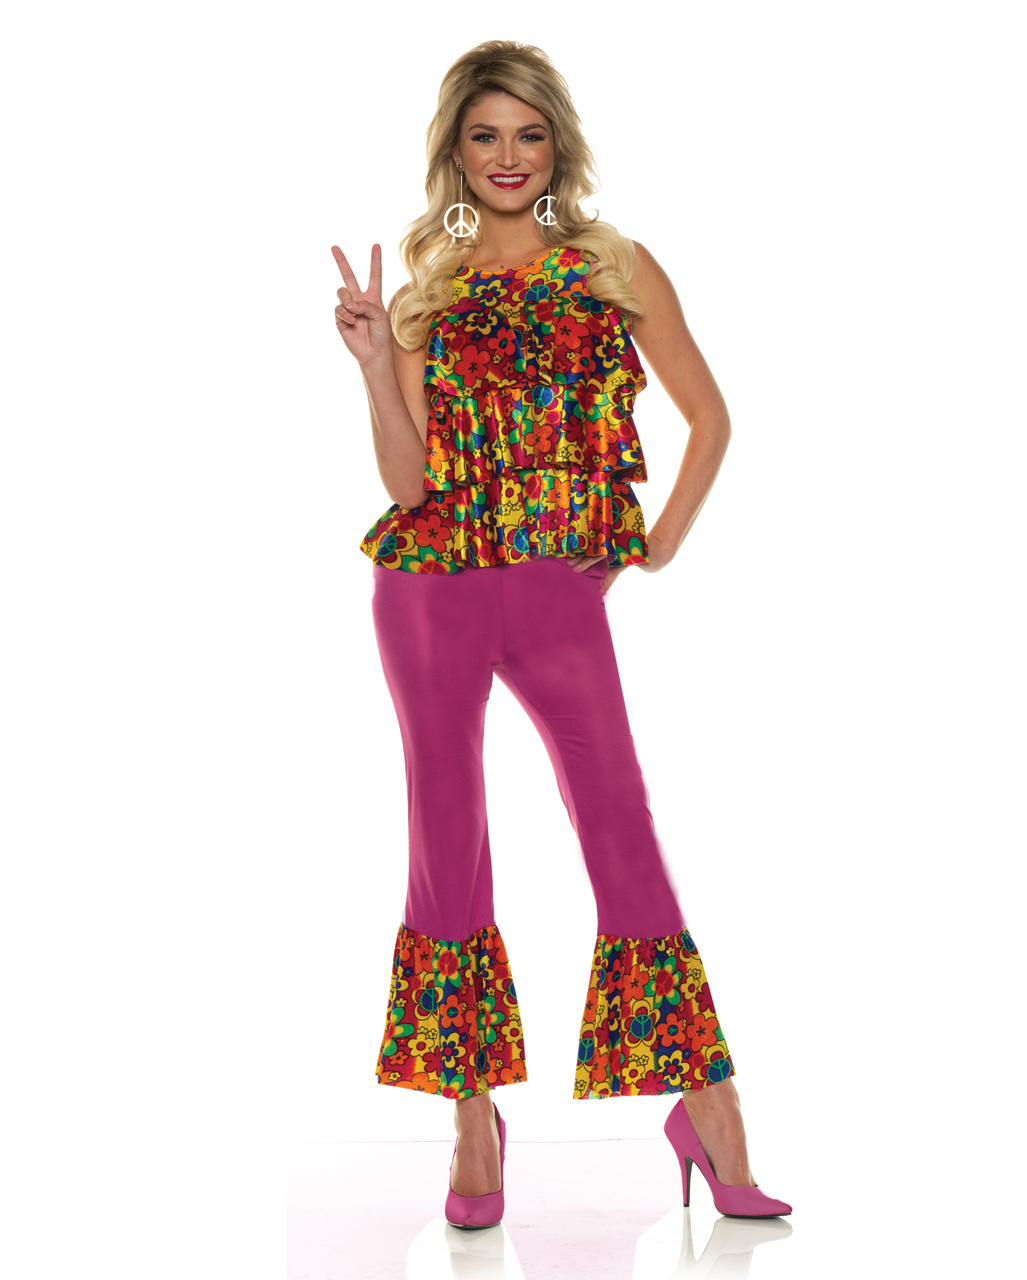 Flower Power Bellbottom Pants 60s Costume